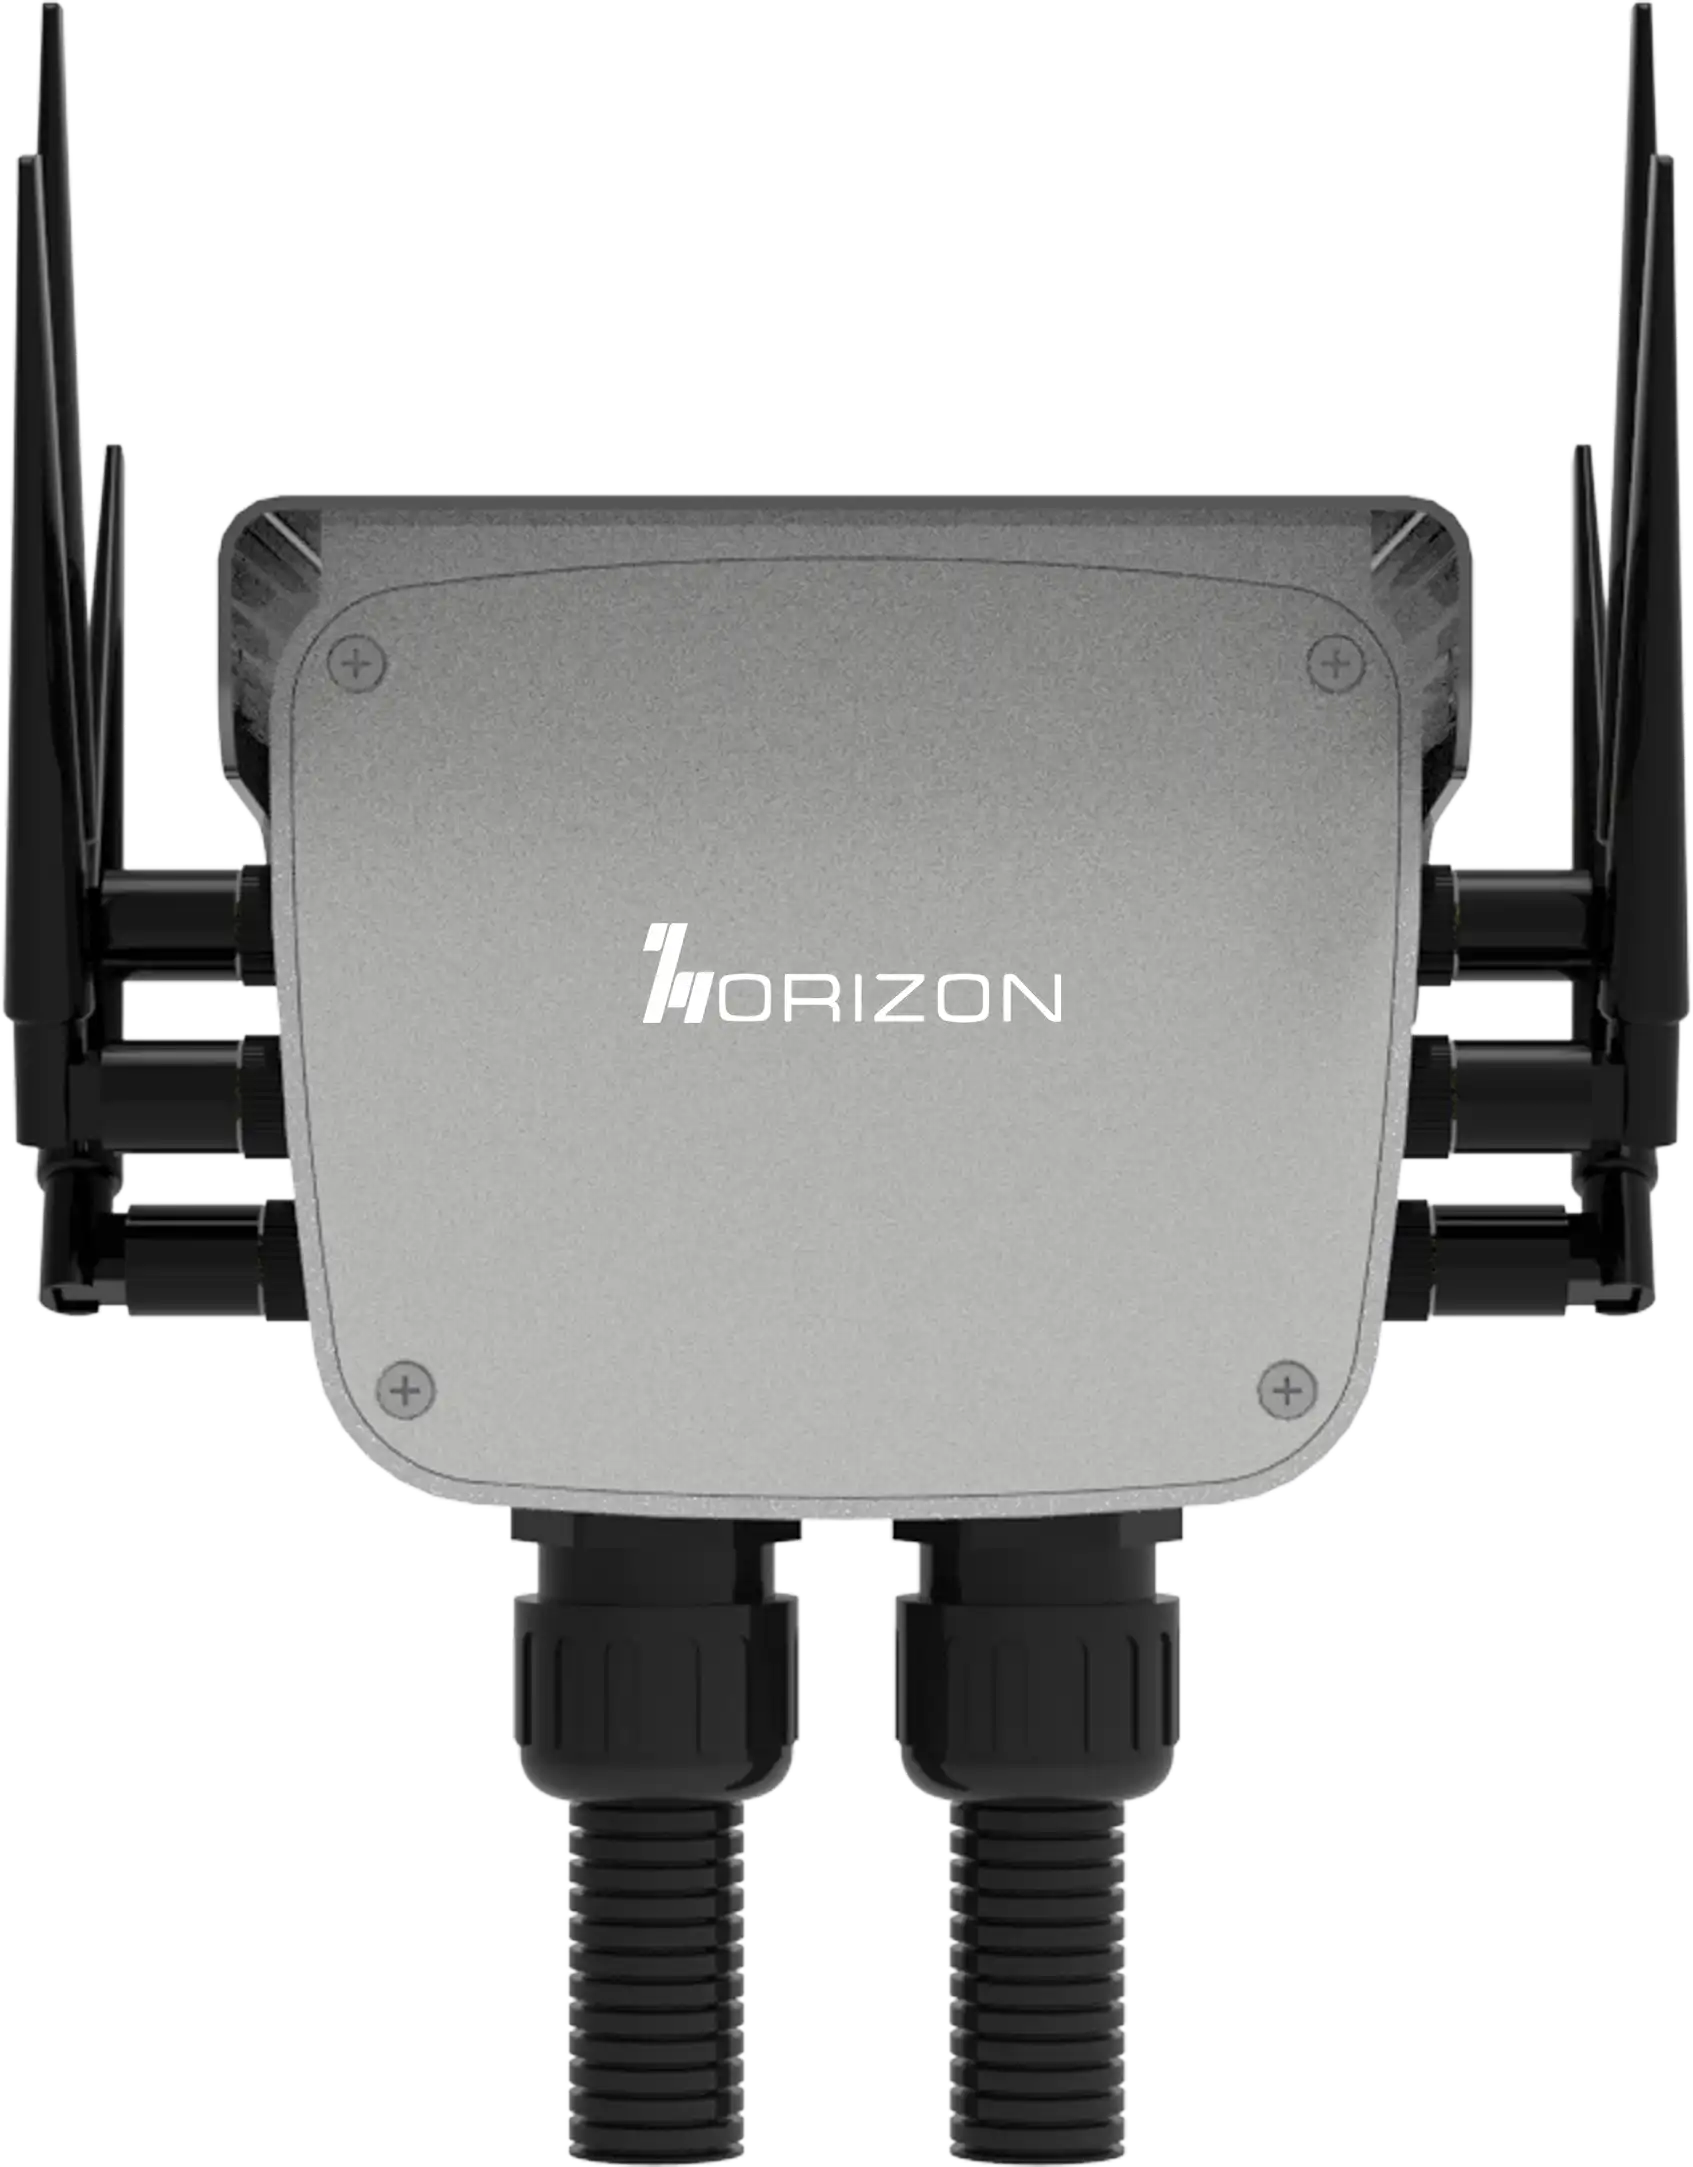 Horizon Powered CC1005G CBRS 5G LTE GSM Camera Back View metal plate concealing the I/O panal and horizon logo